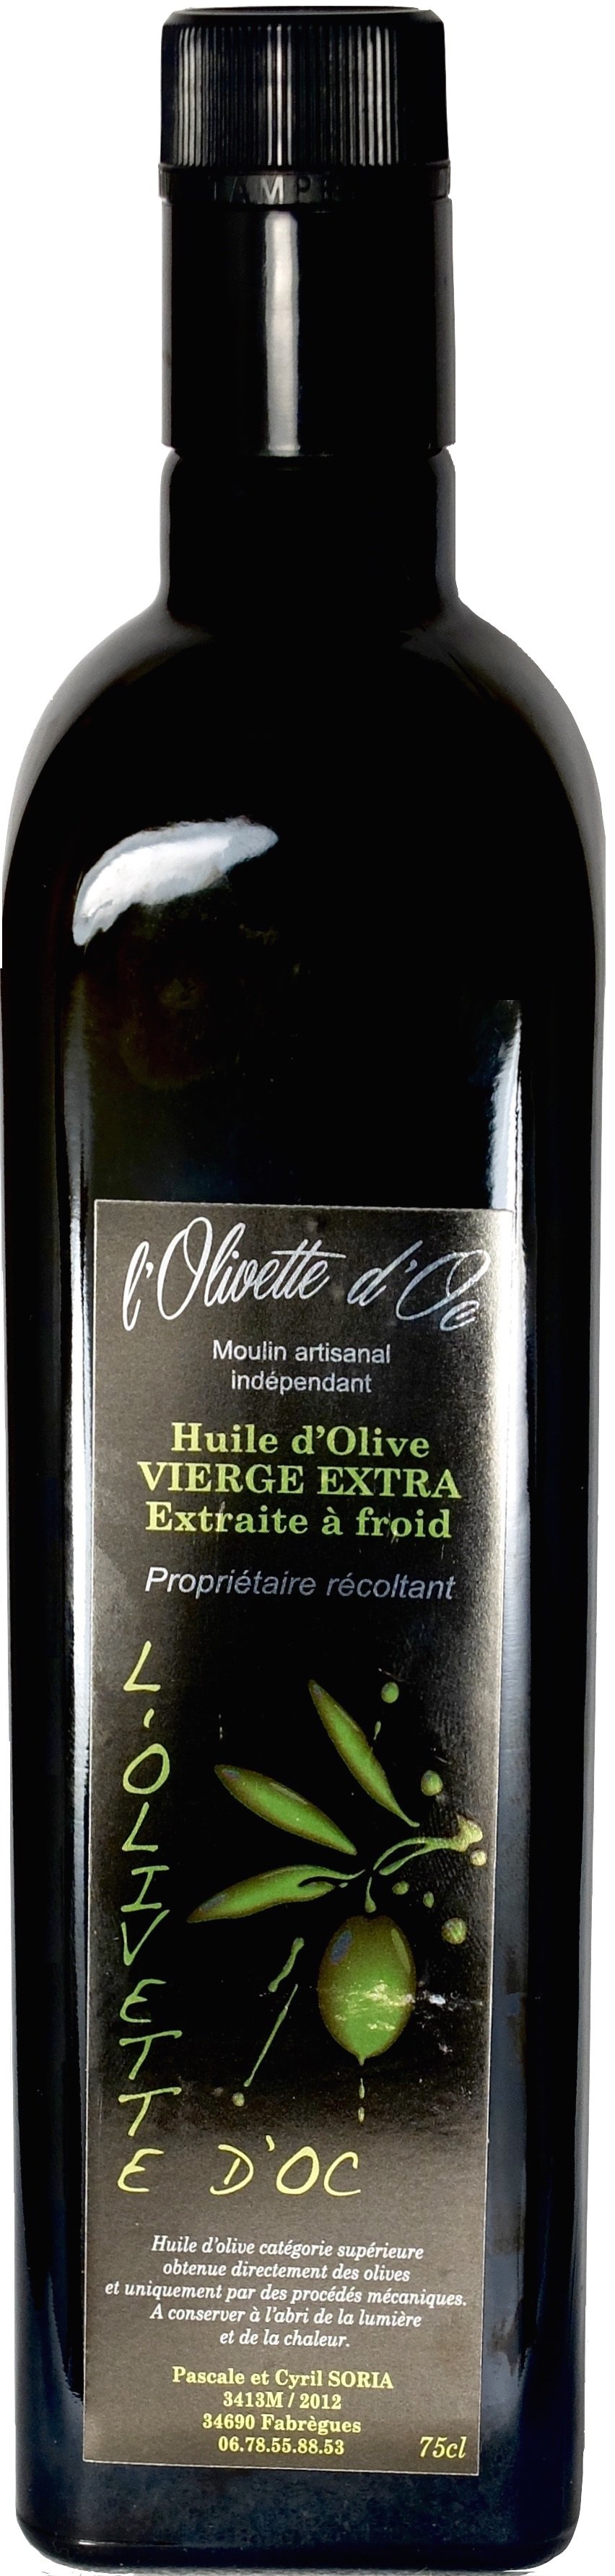 Huile d'olive vierge extra Bidon fer 50cl - Domaine des peres